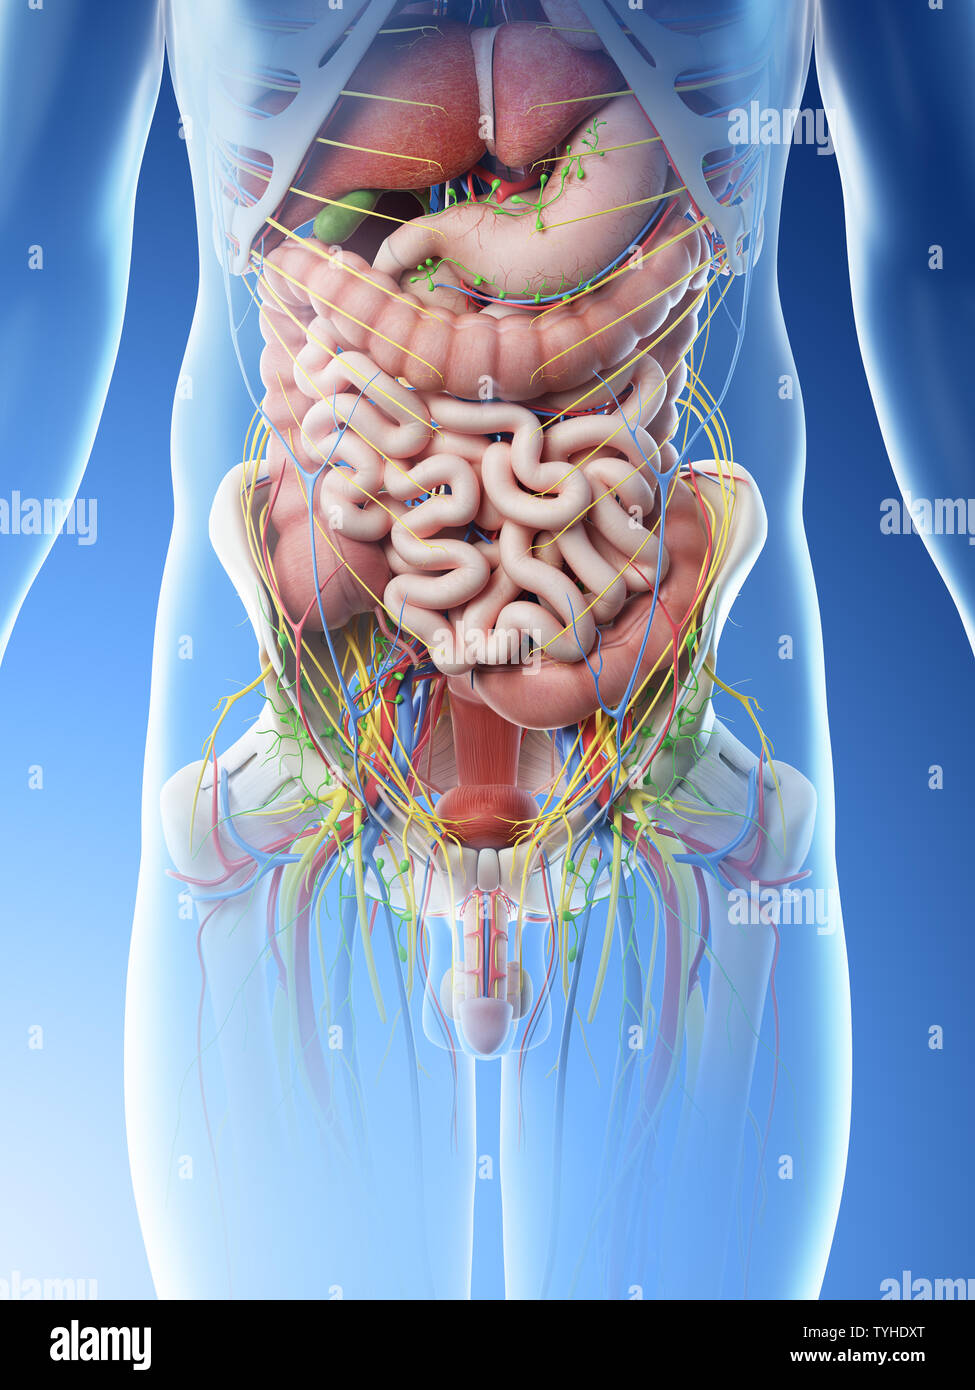 Abdominal Organs Diagram Woman